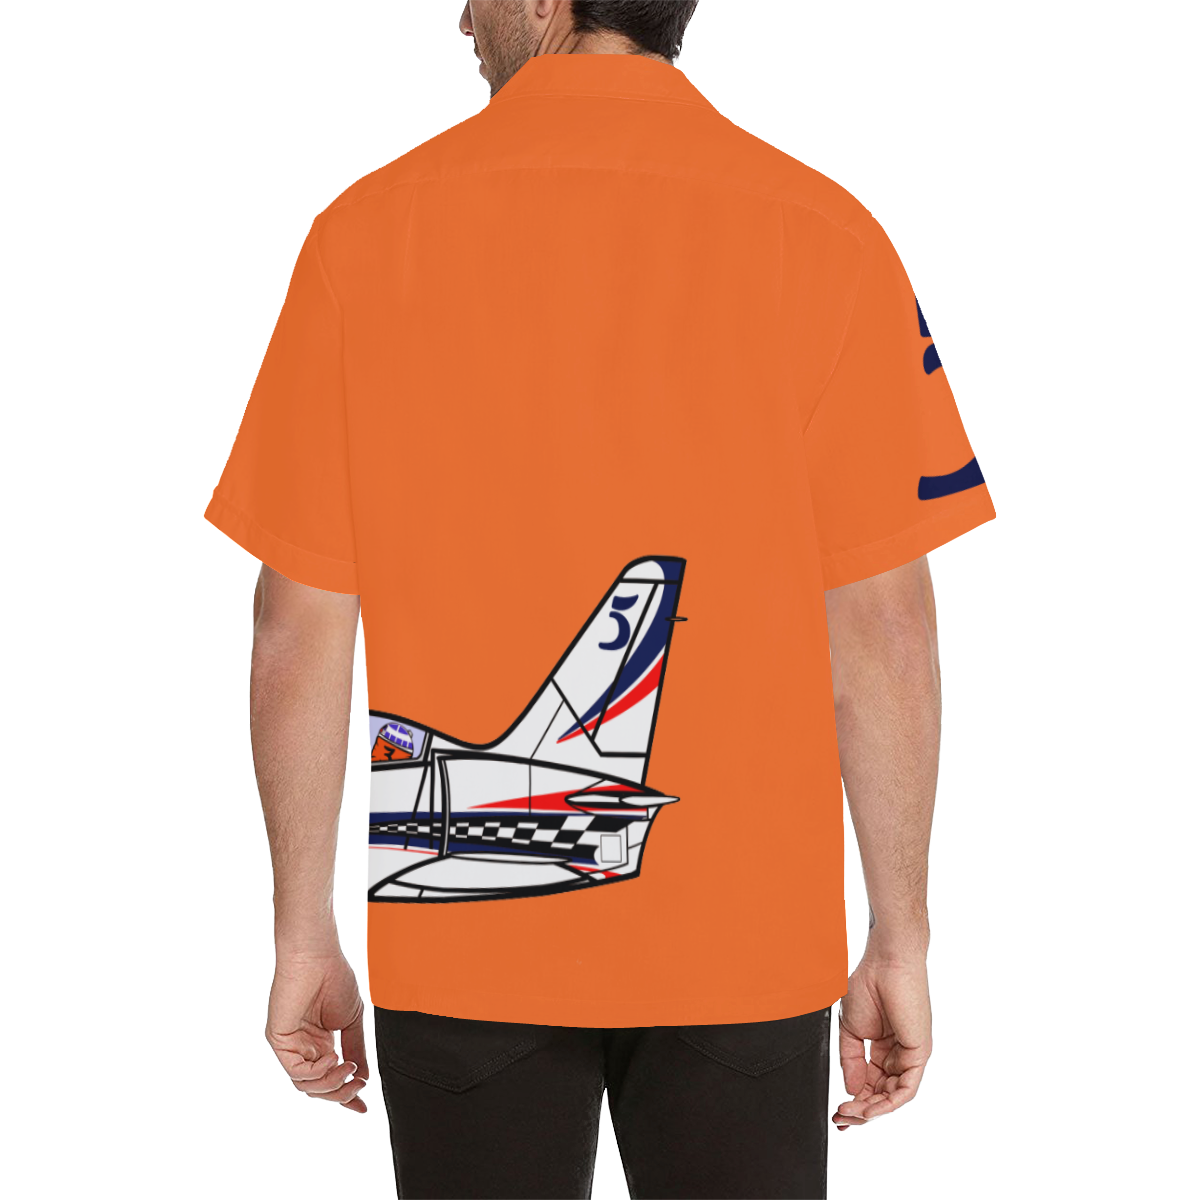 Back side image of Orange HAWAIIAN SHIRT. Plane image is inscribed  on orange shirt